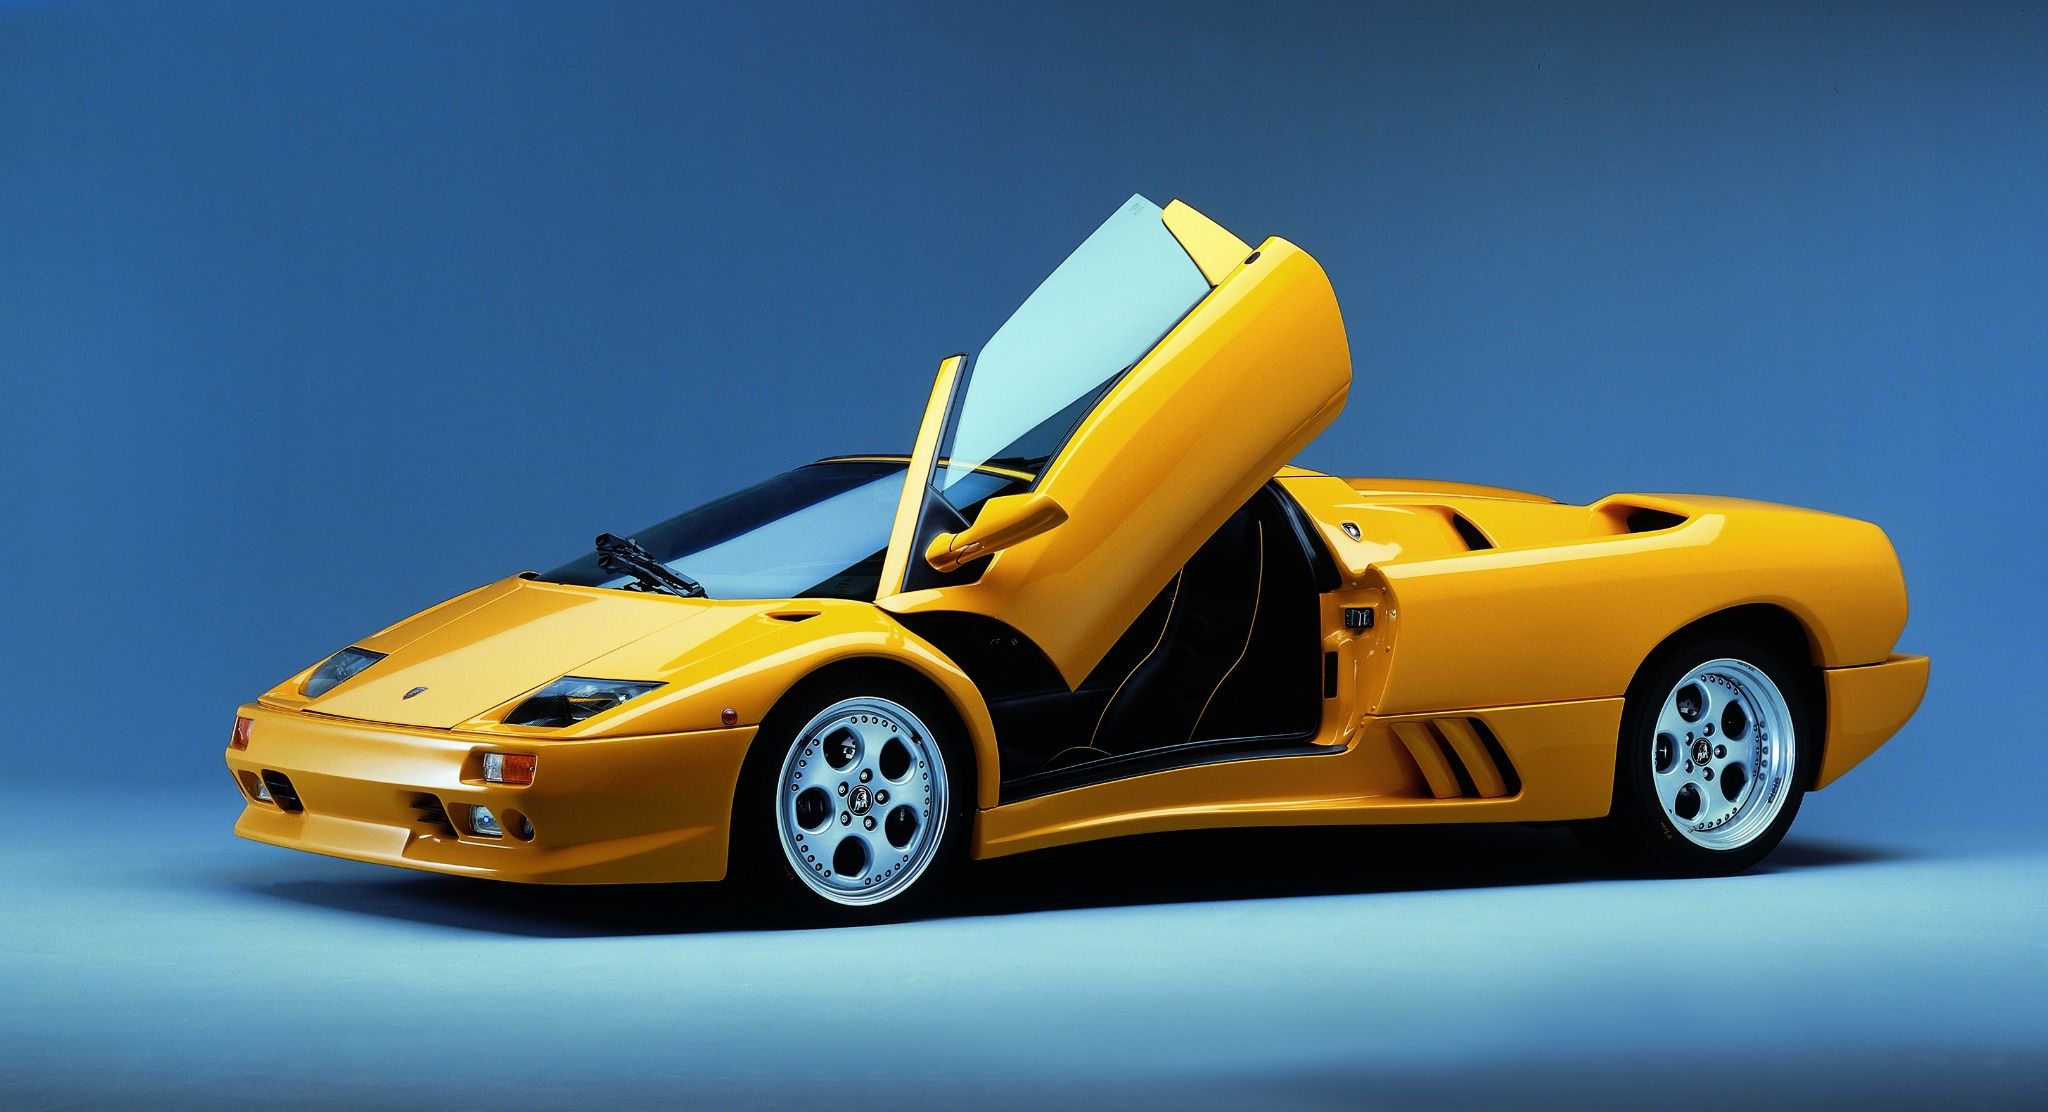 Side view of a Lamborghini Diablo